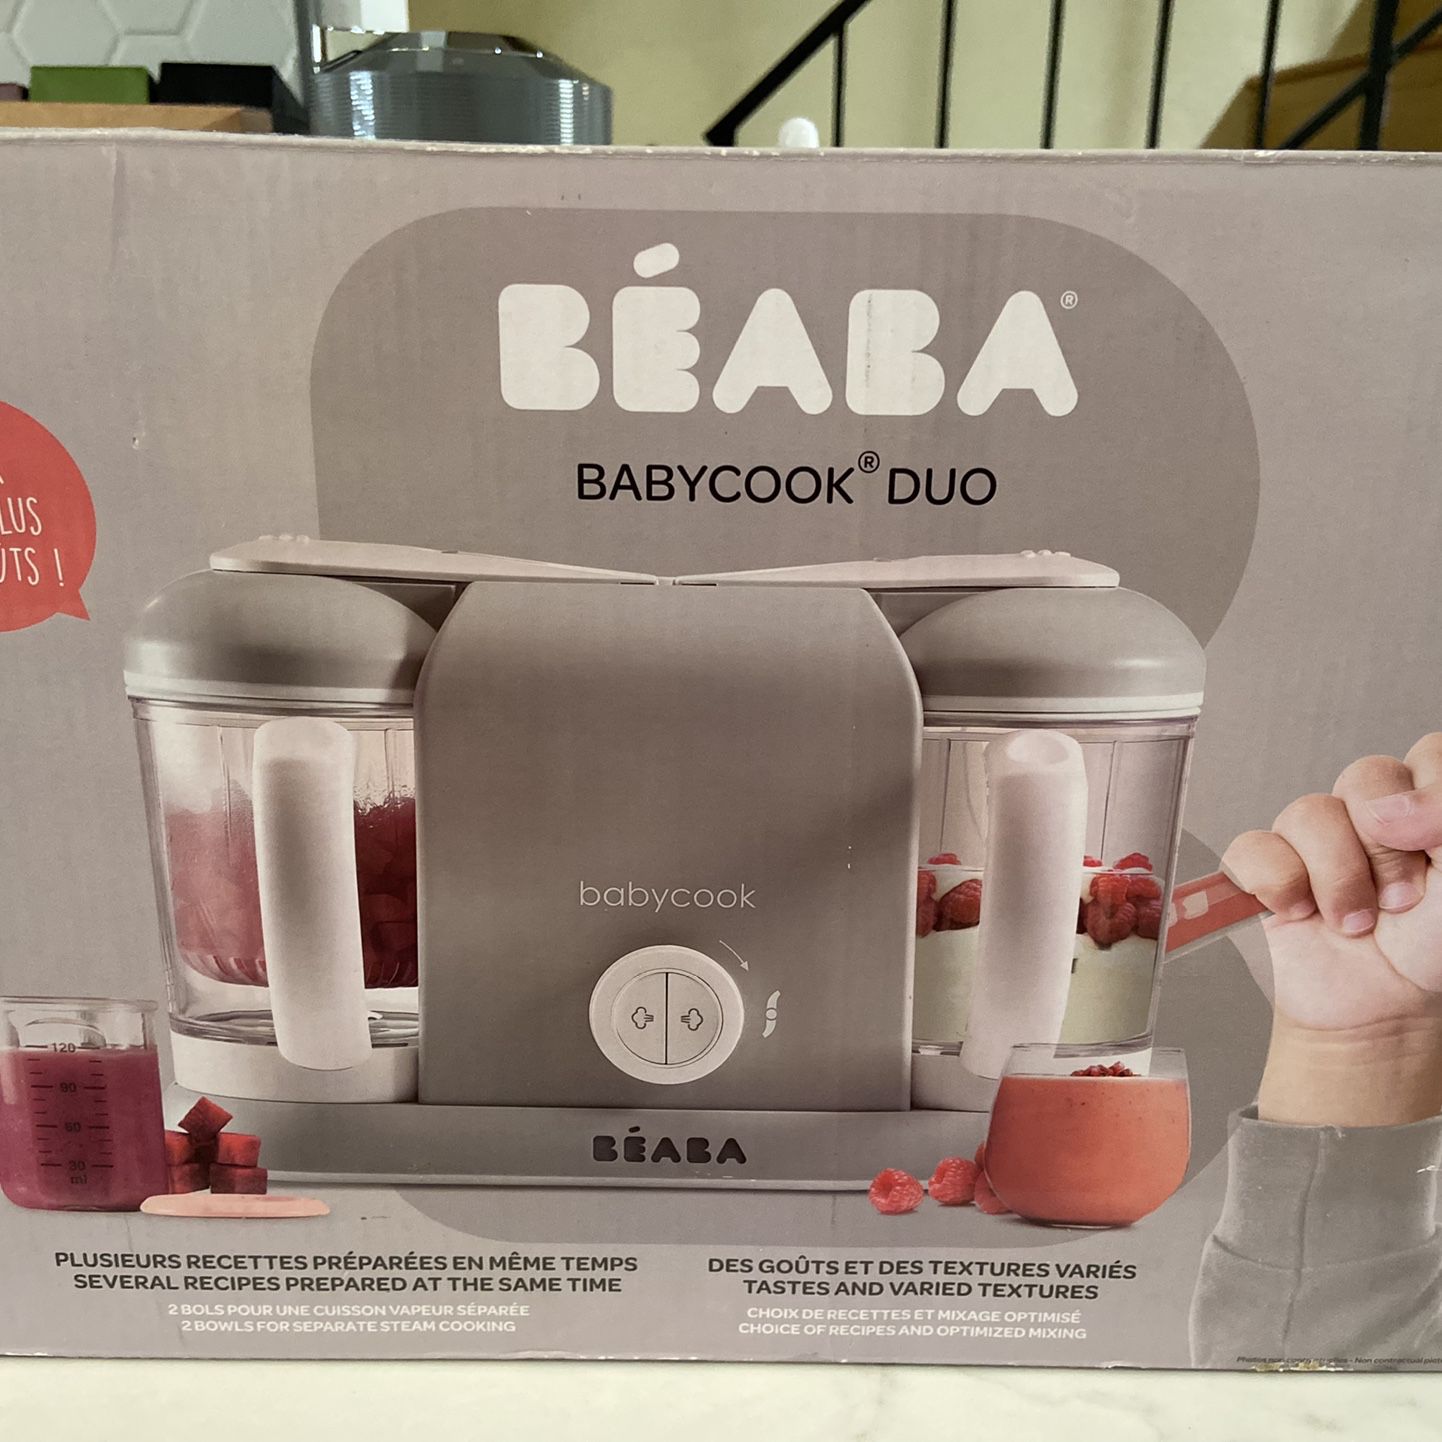 Beaba Babycook Duo 4 in 1 Baby Food Maker for Sale in Burbank, CA